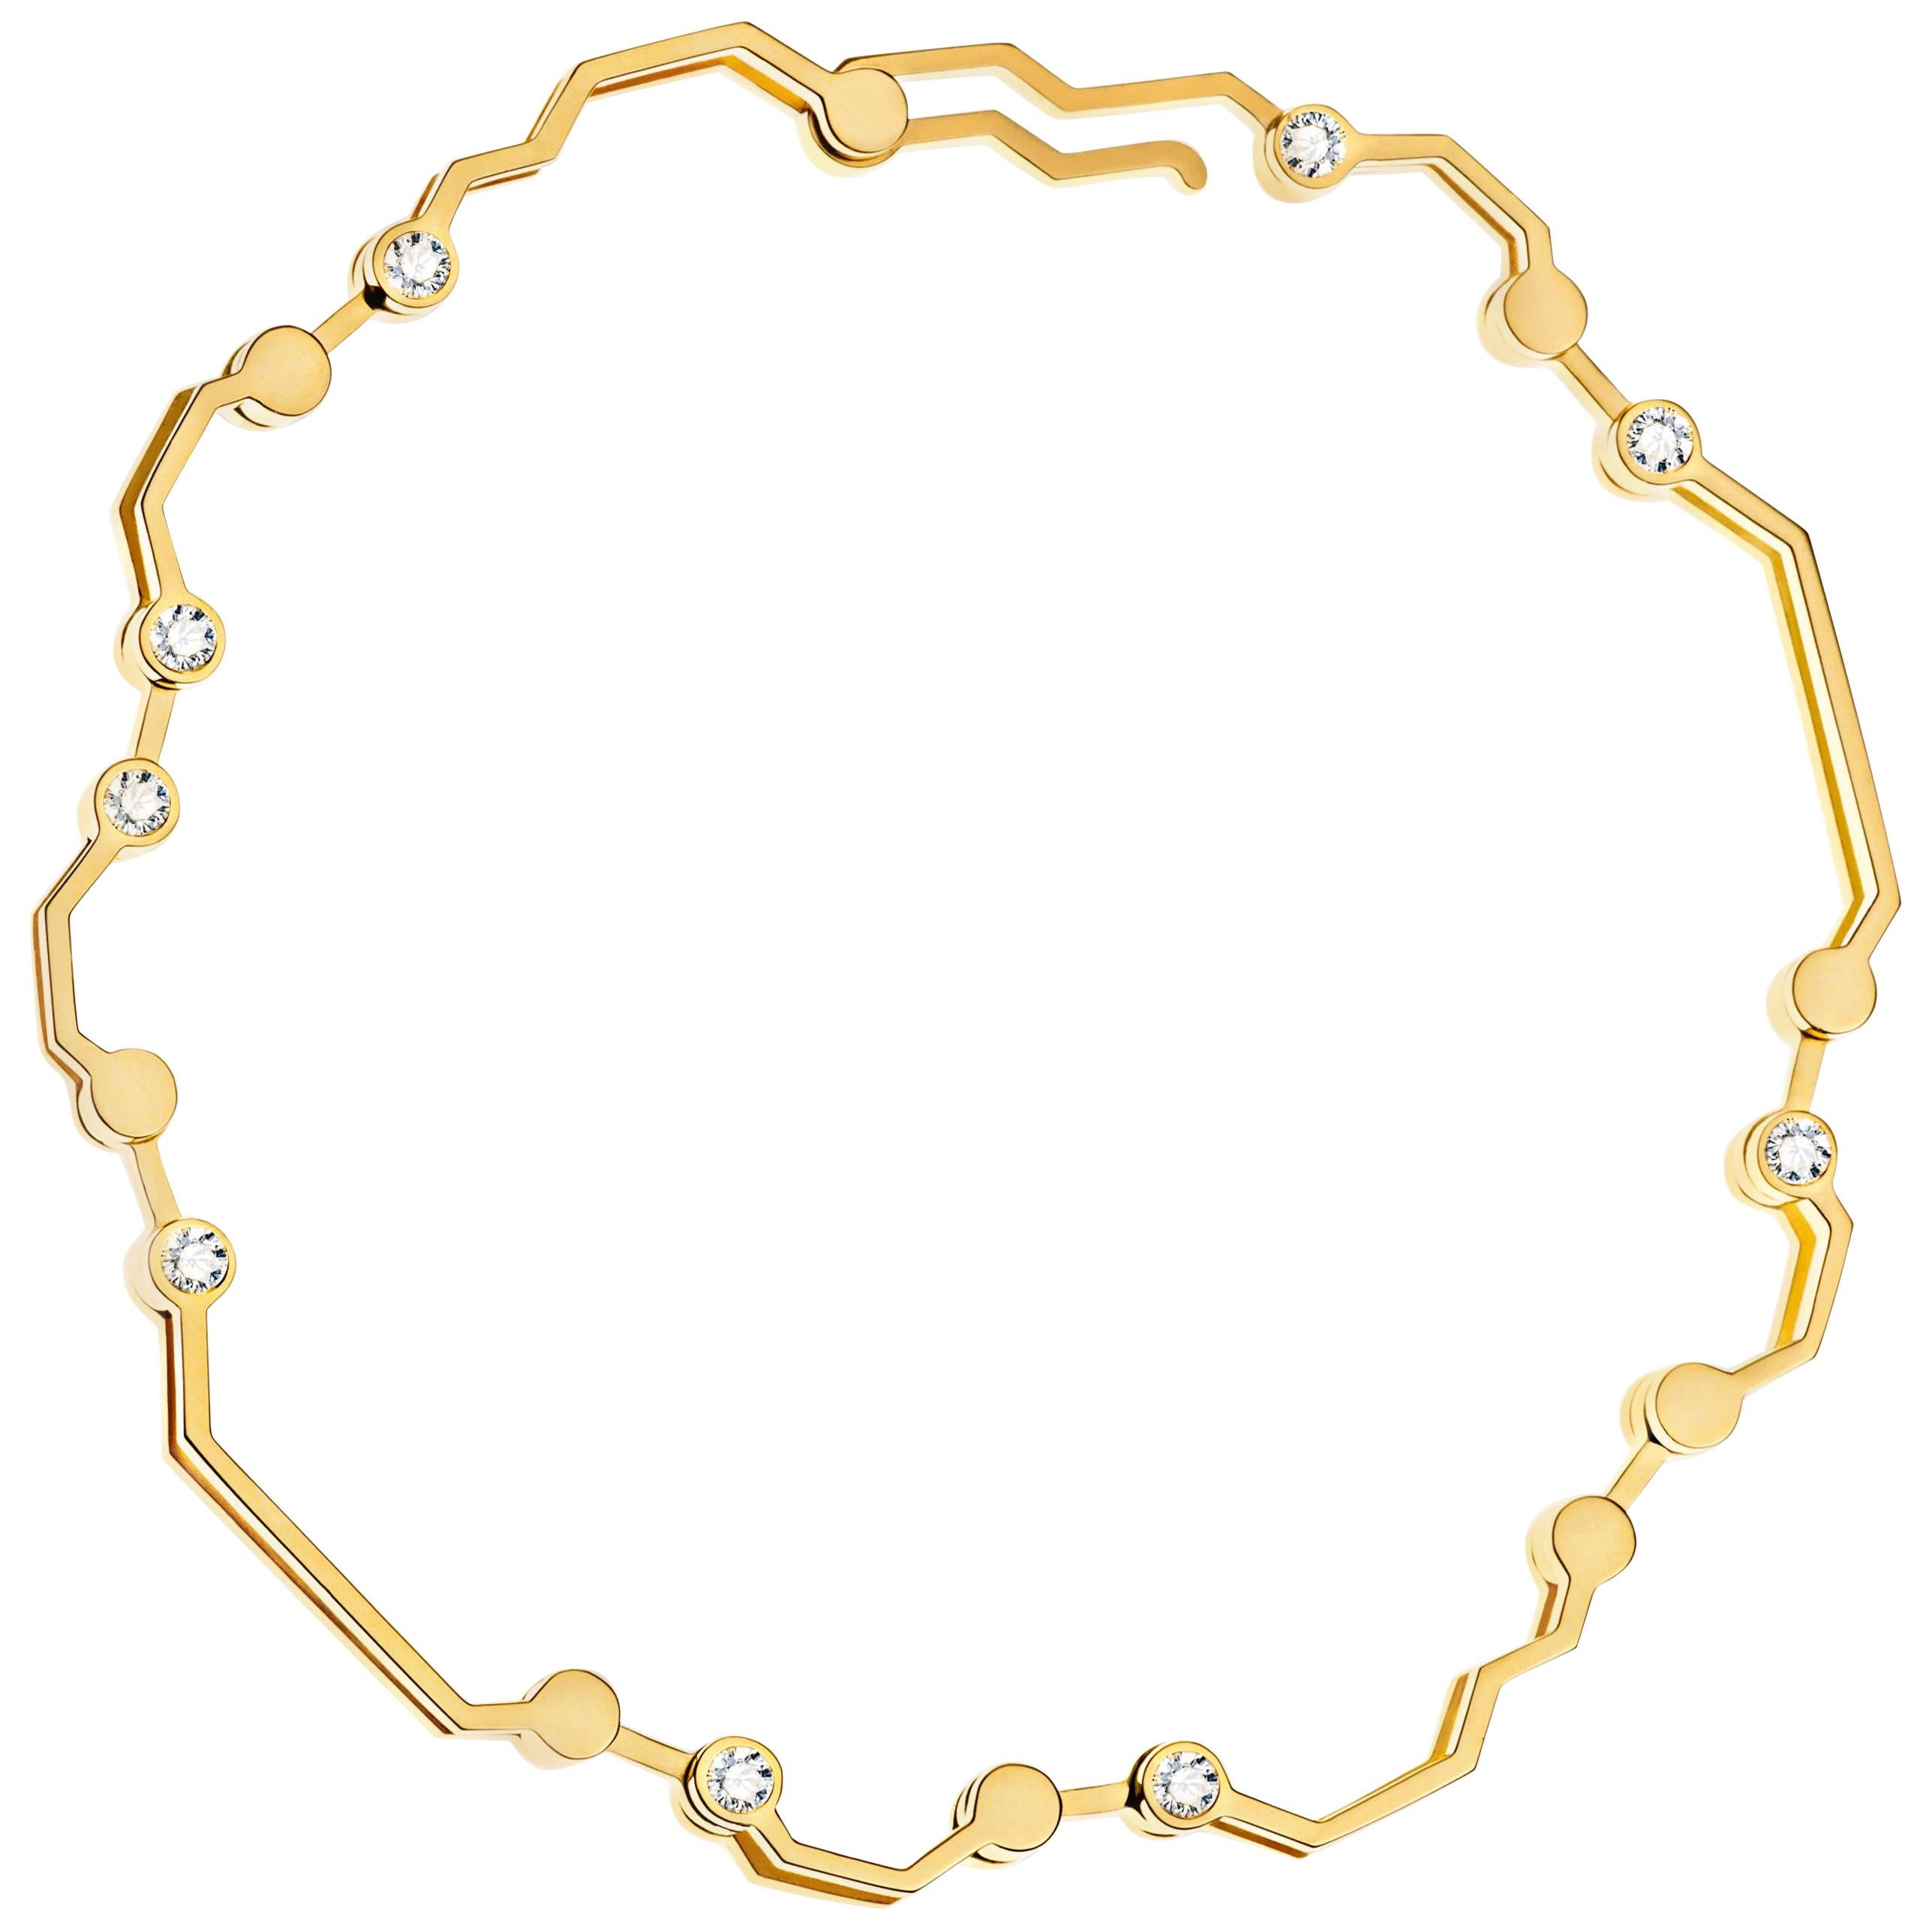 Nathalie Jean Contemporary 0.324 Carat Diamond Gold Articulated Link Bracelet